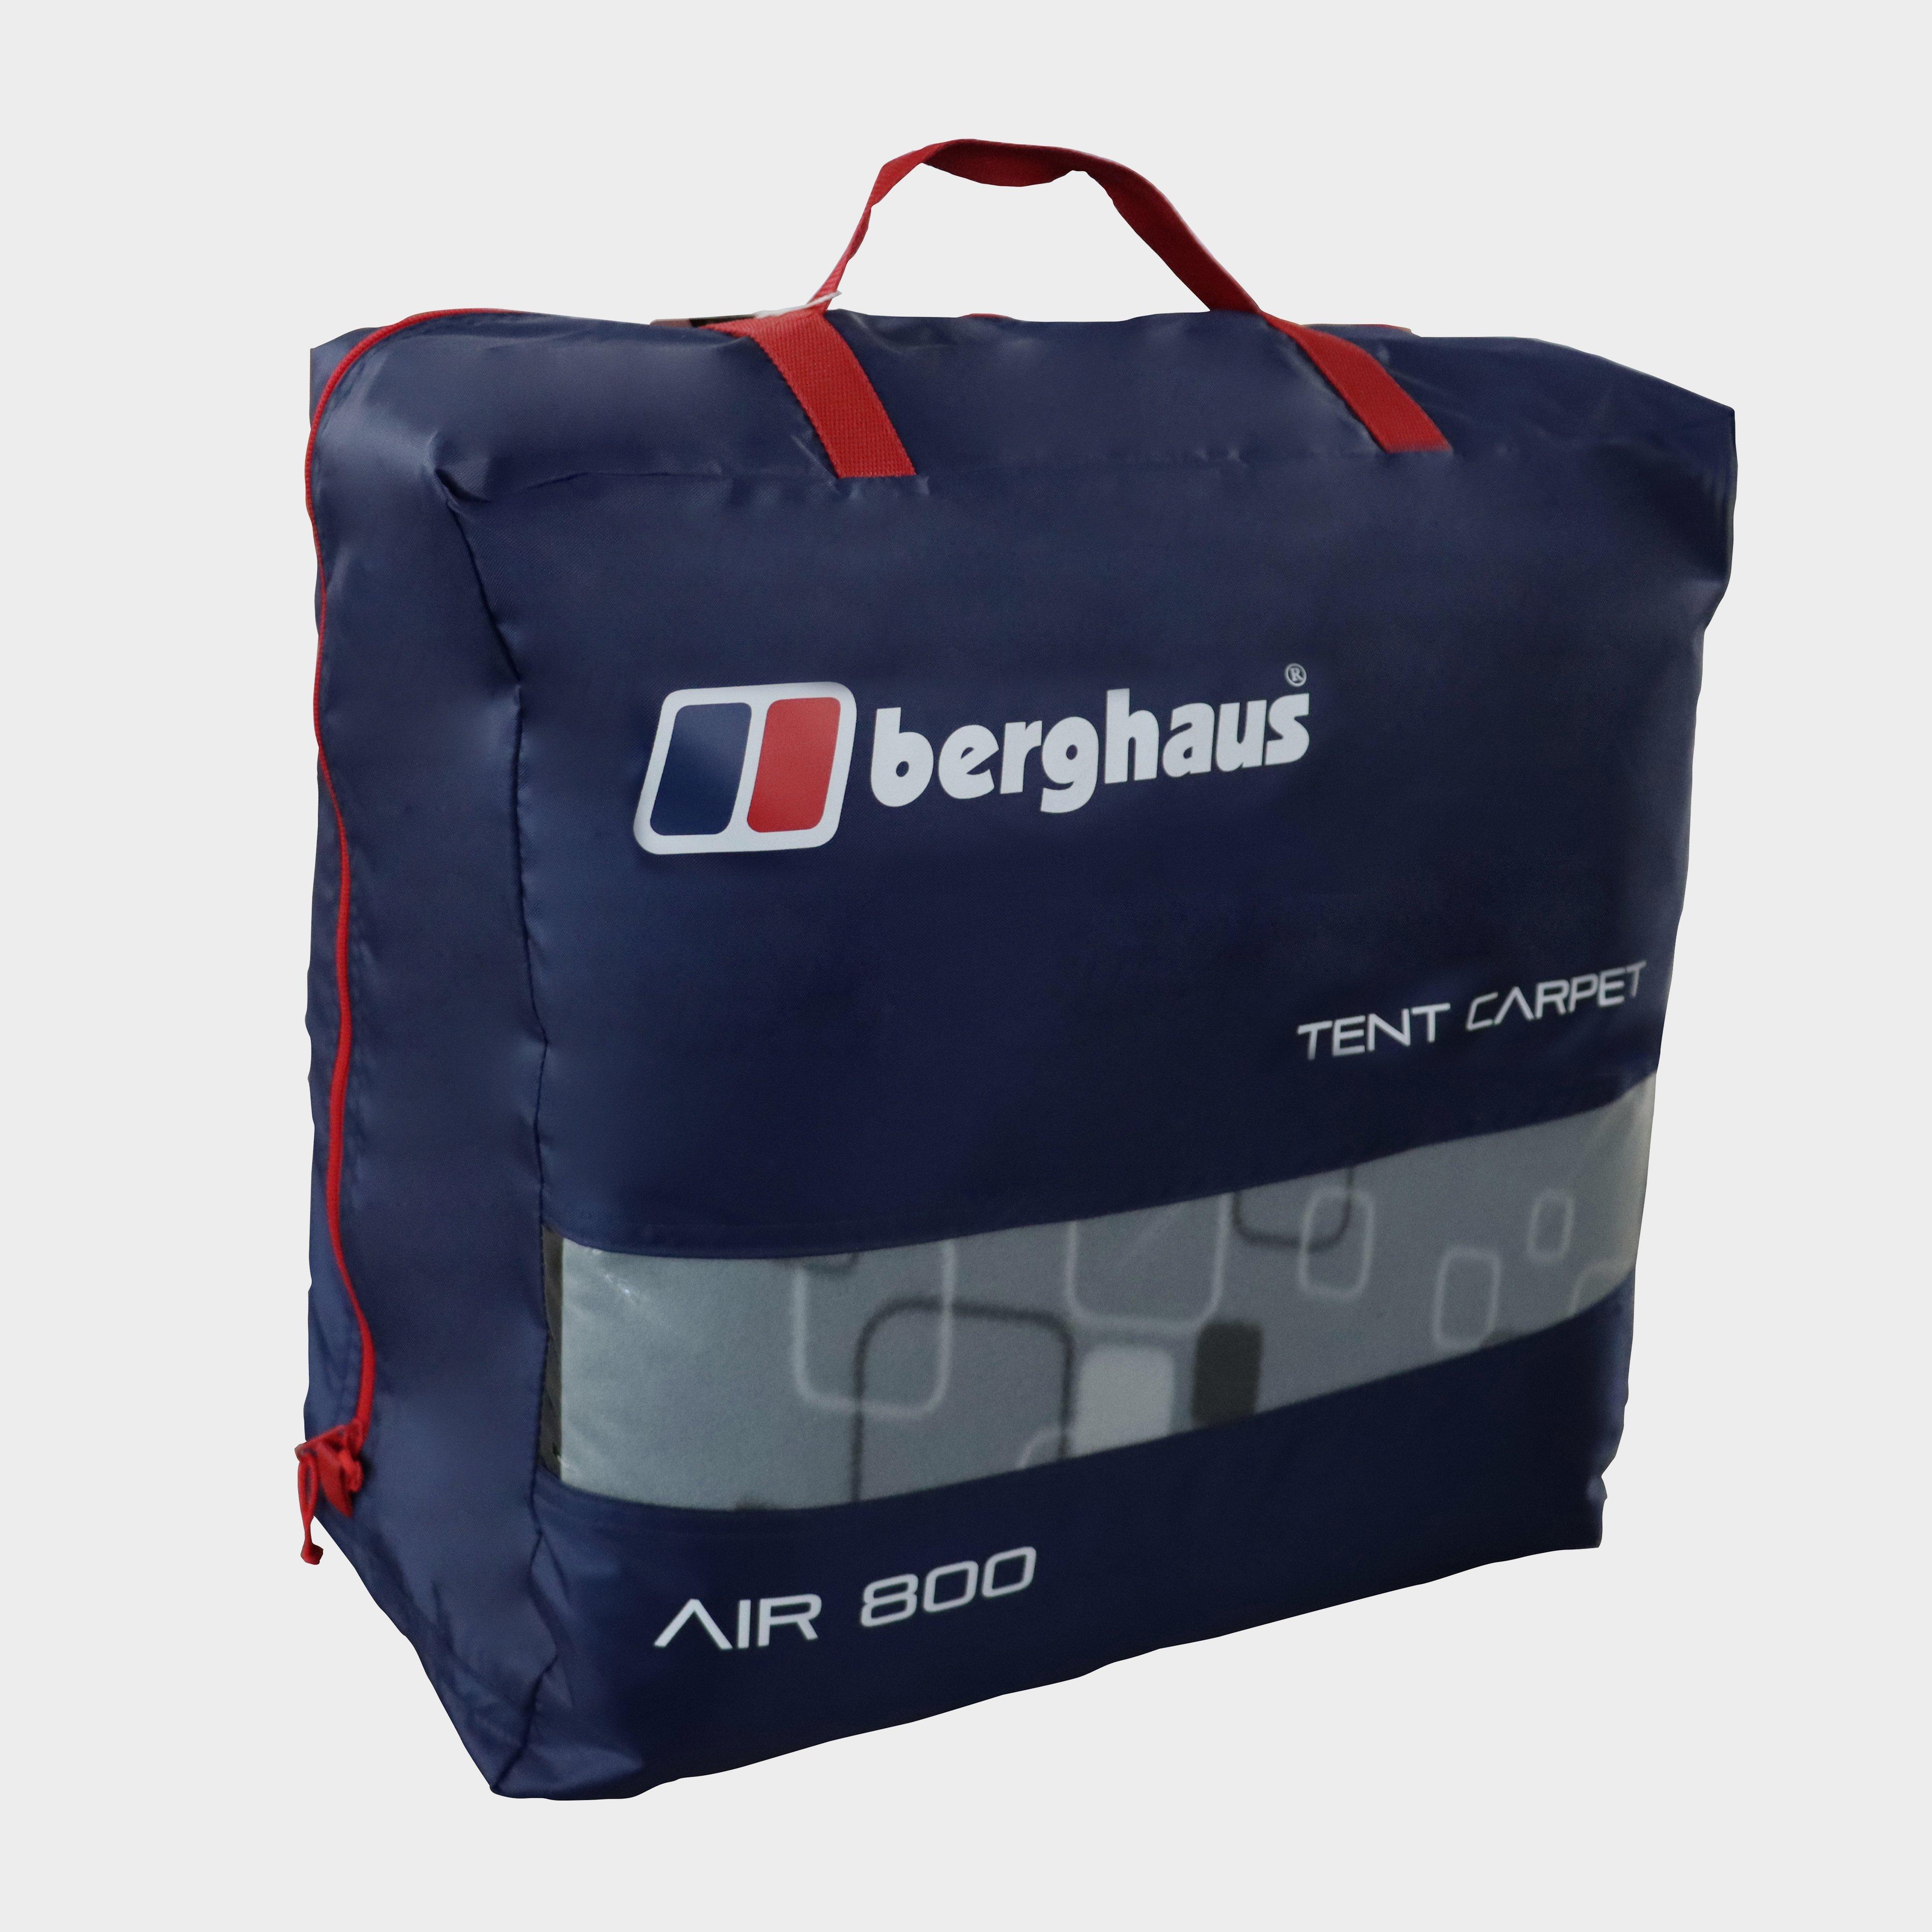 Berghaus Berghaus Air 800/8.1/8 Tent Carpet - Grey, Grey